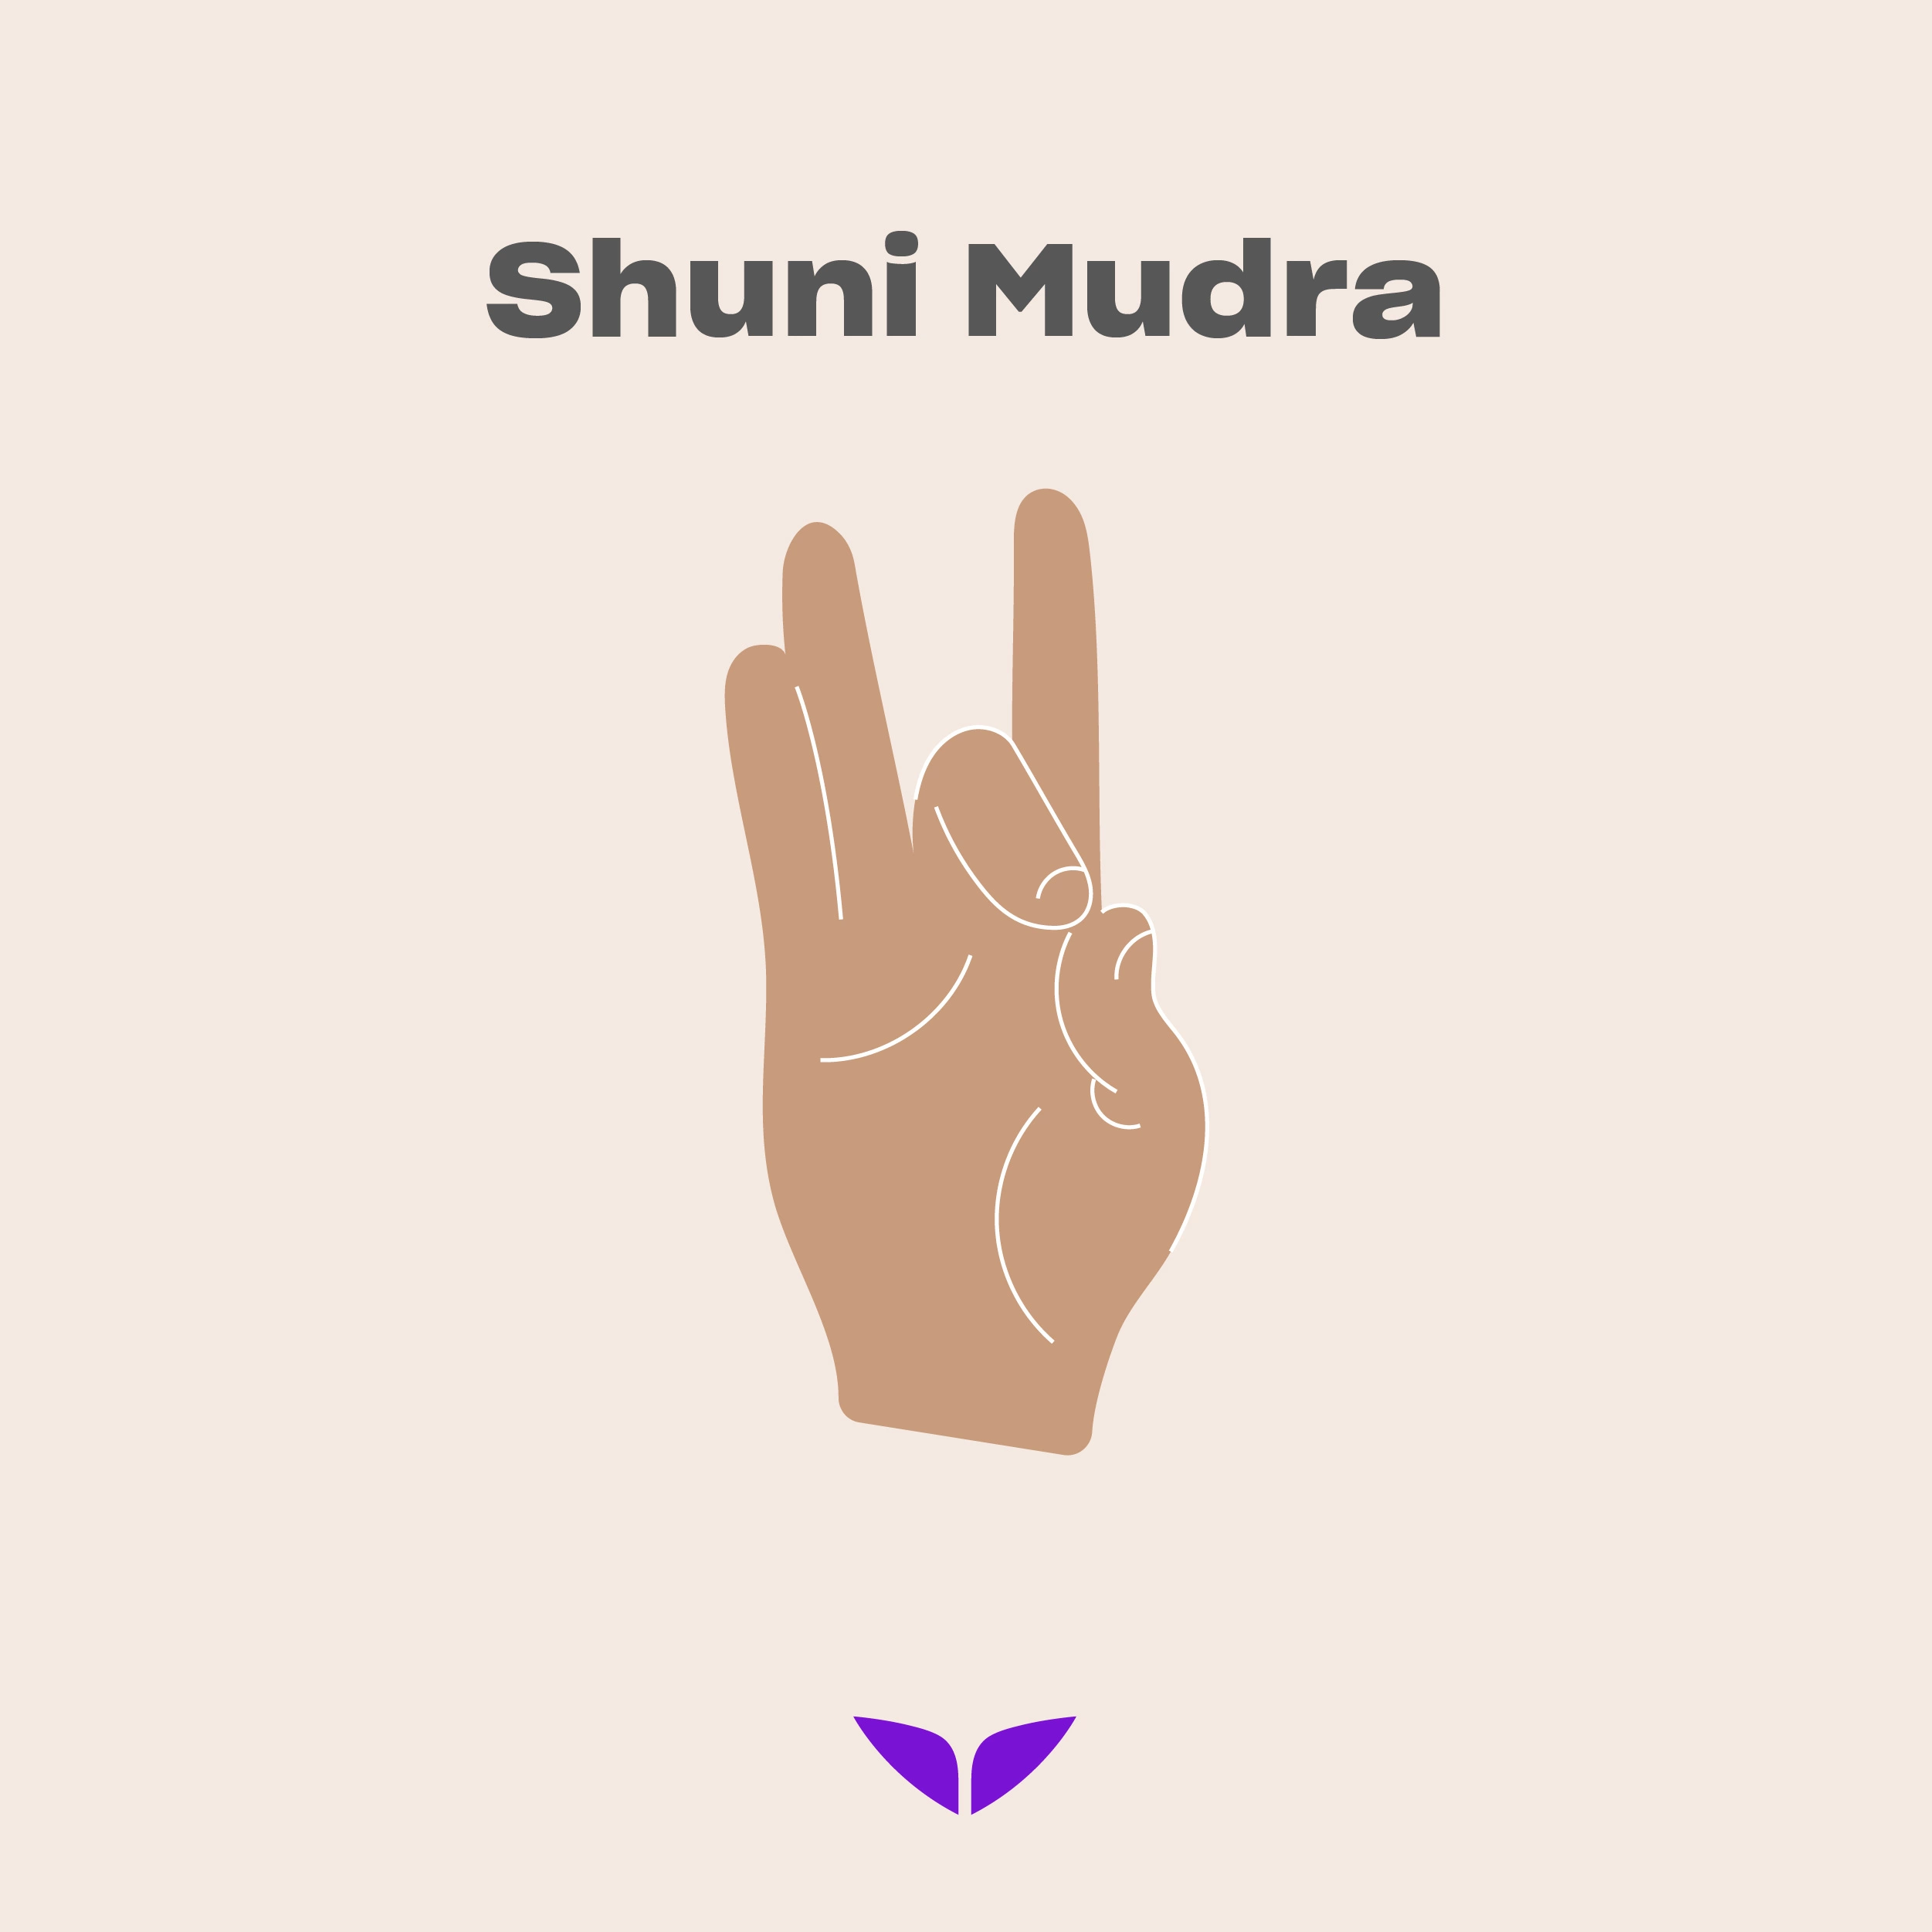 The Shuni mudra: seal of patience